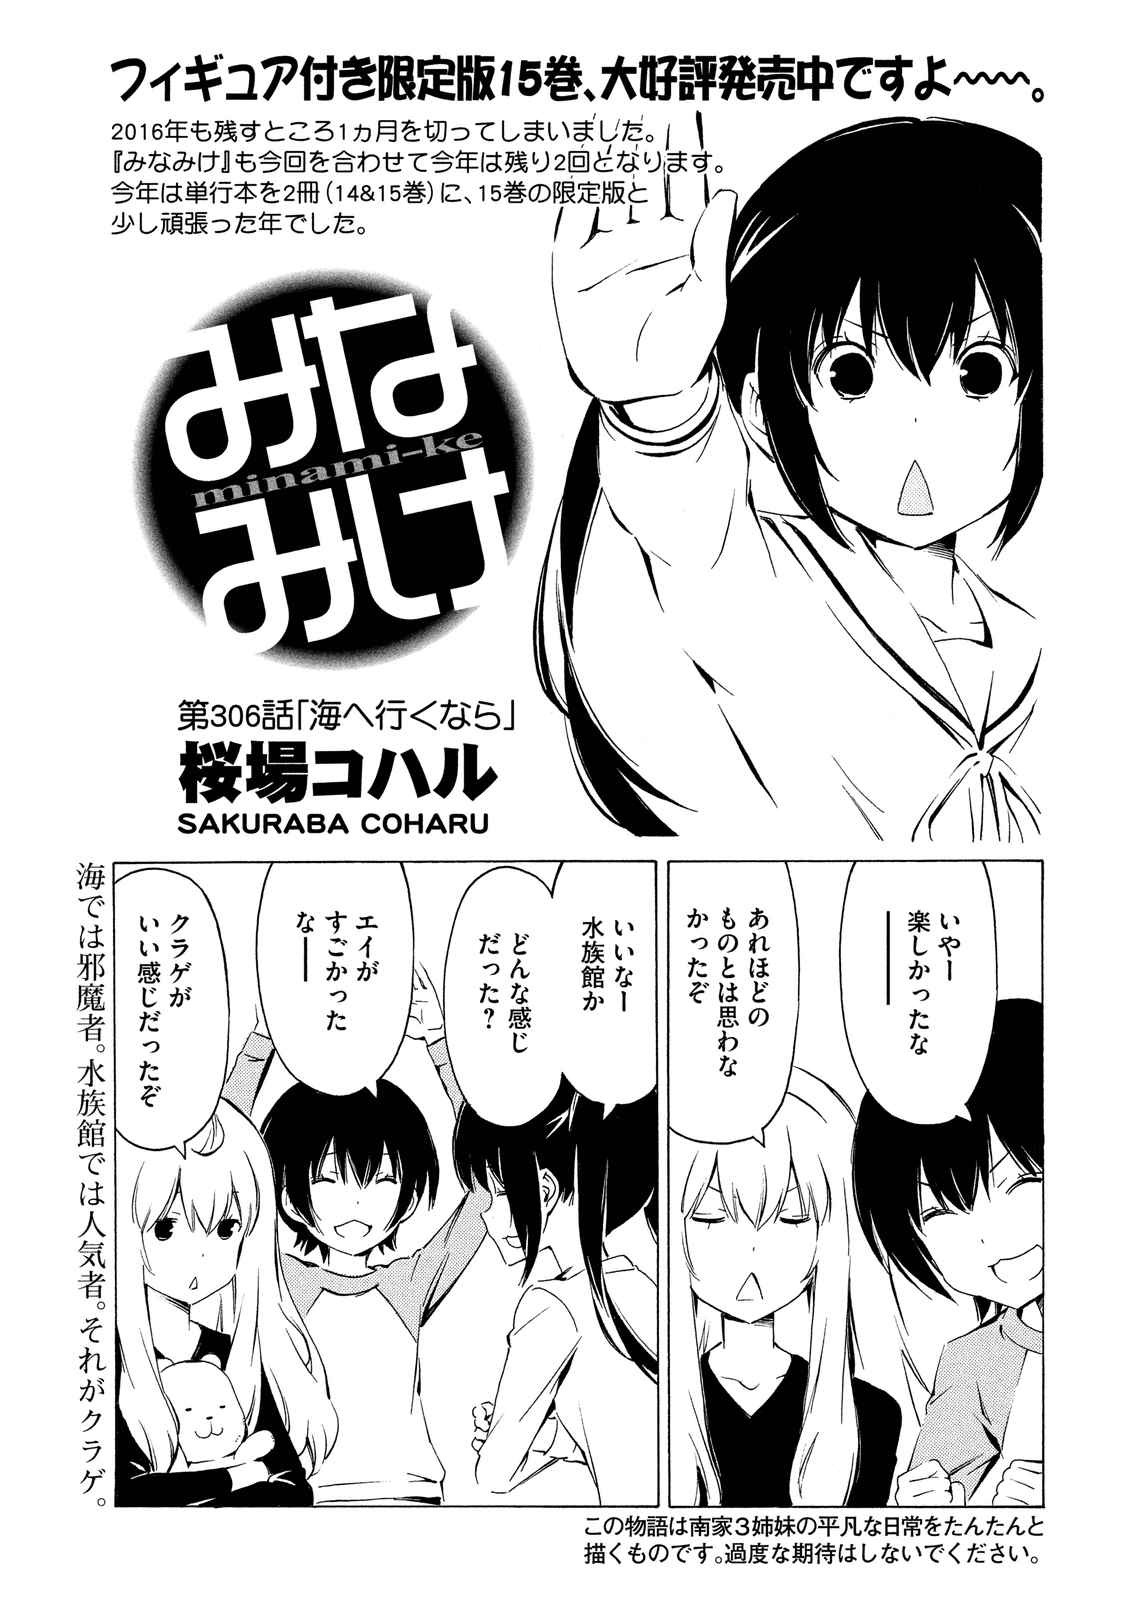 Minami-ke - Chapter 306 - Page 1